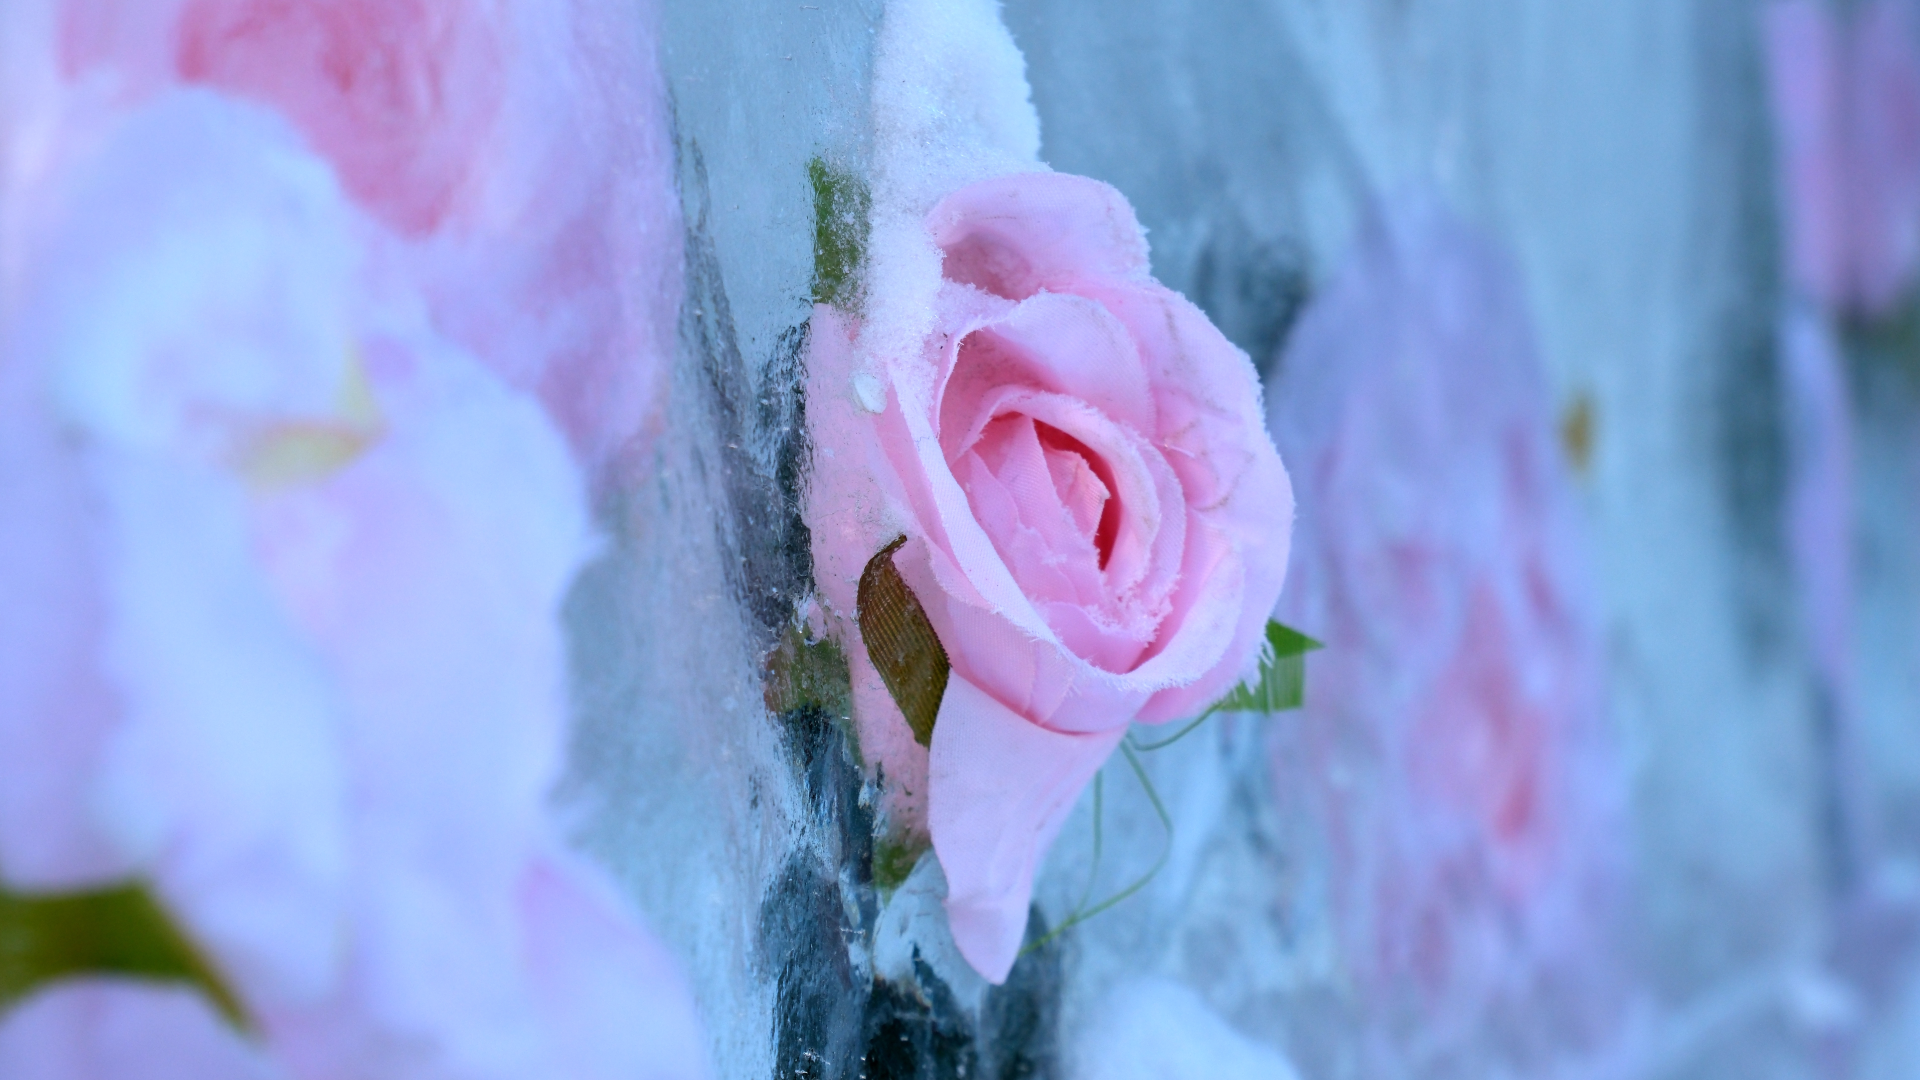 Ice-wall rose display in Shenyang's Nanhu Park